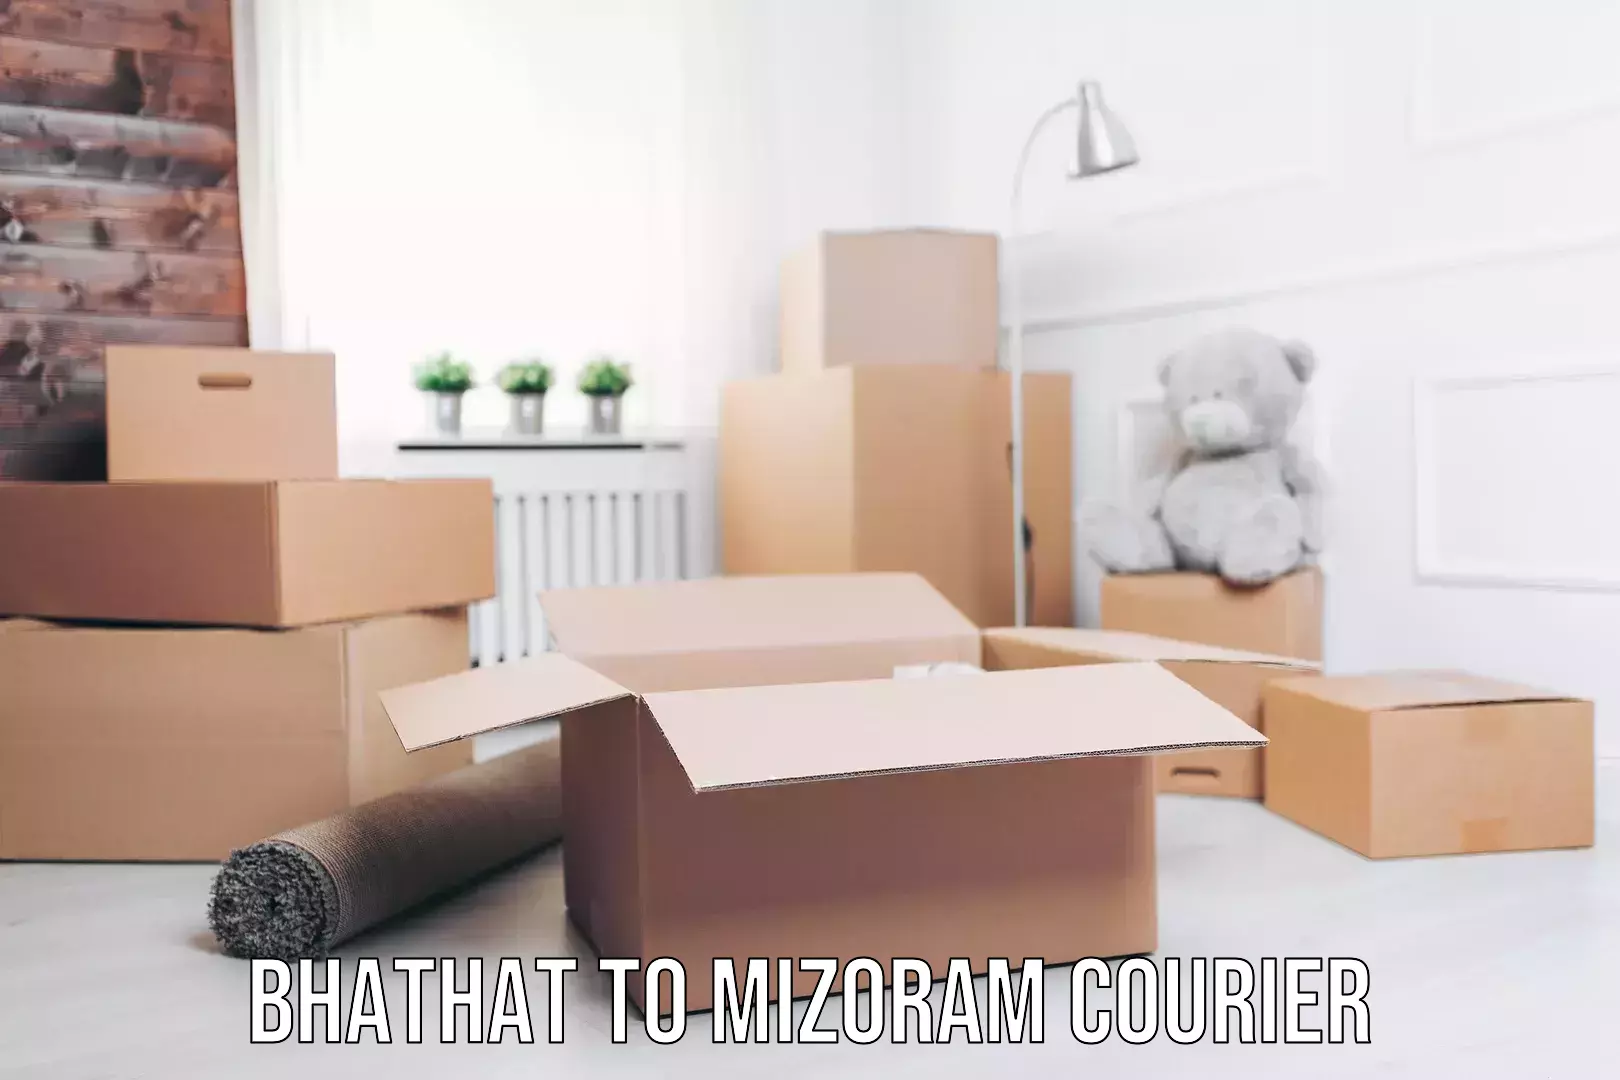 Courier service comparison Bhathat to Mizoram